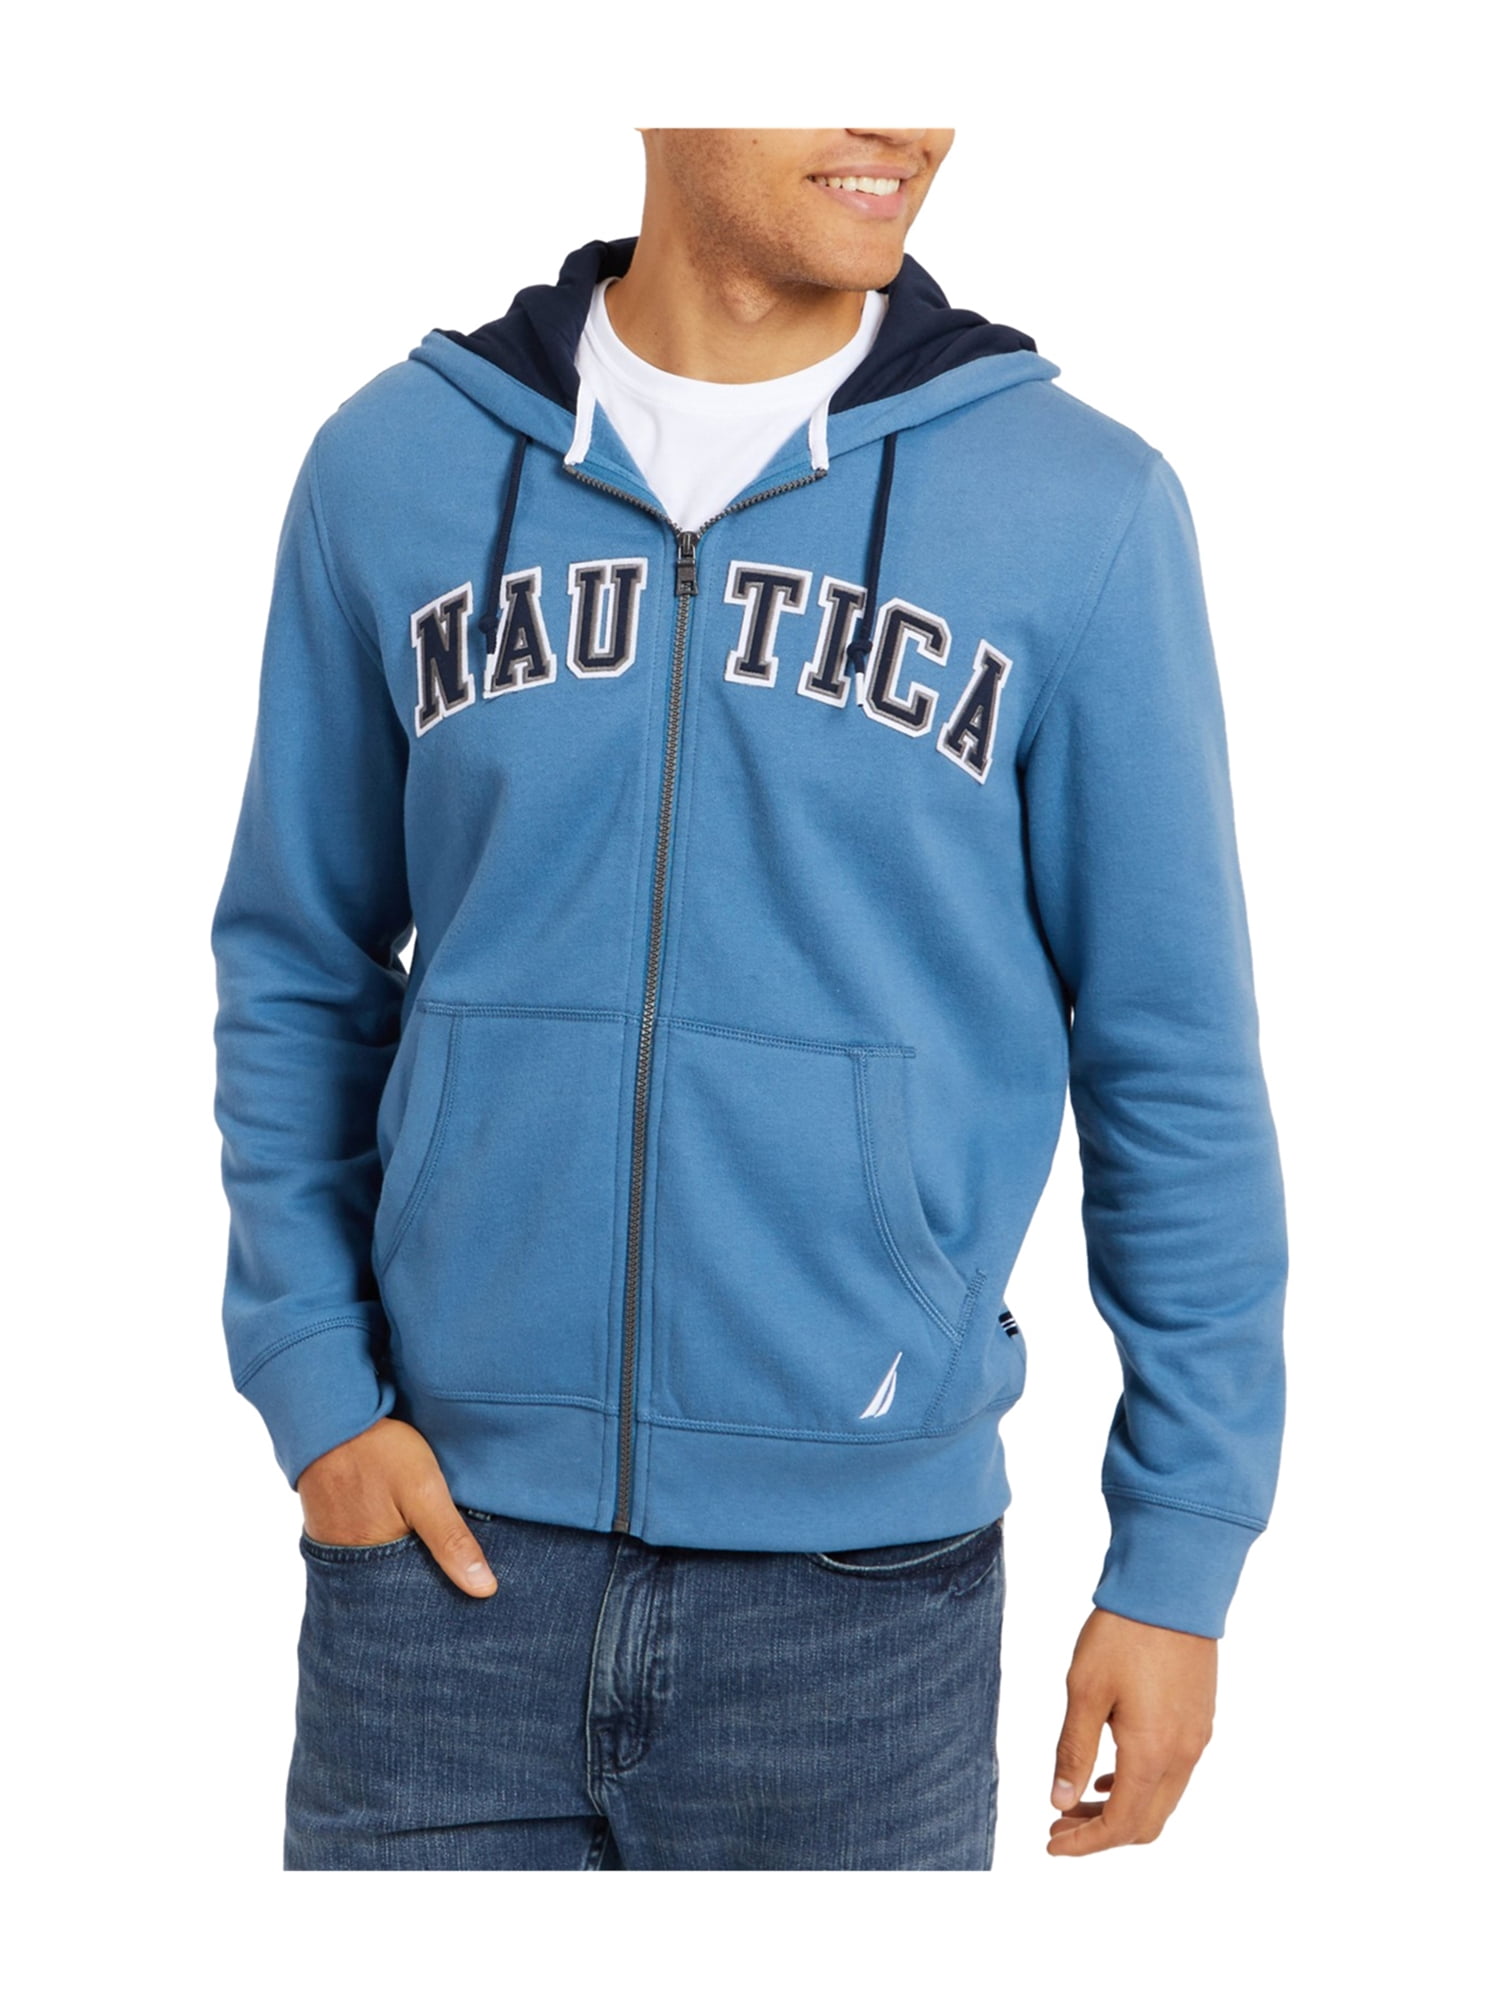 Nautica Mens Full-Zip Sweater Hoodie Sweatshirt Sweatshirt